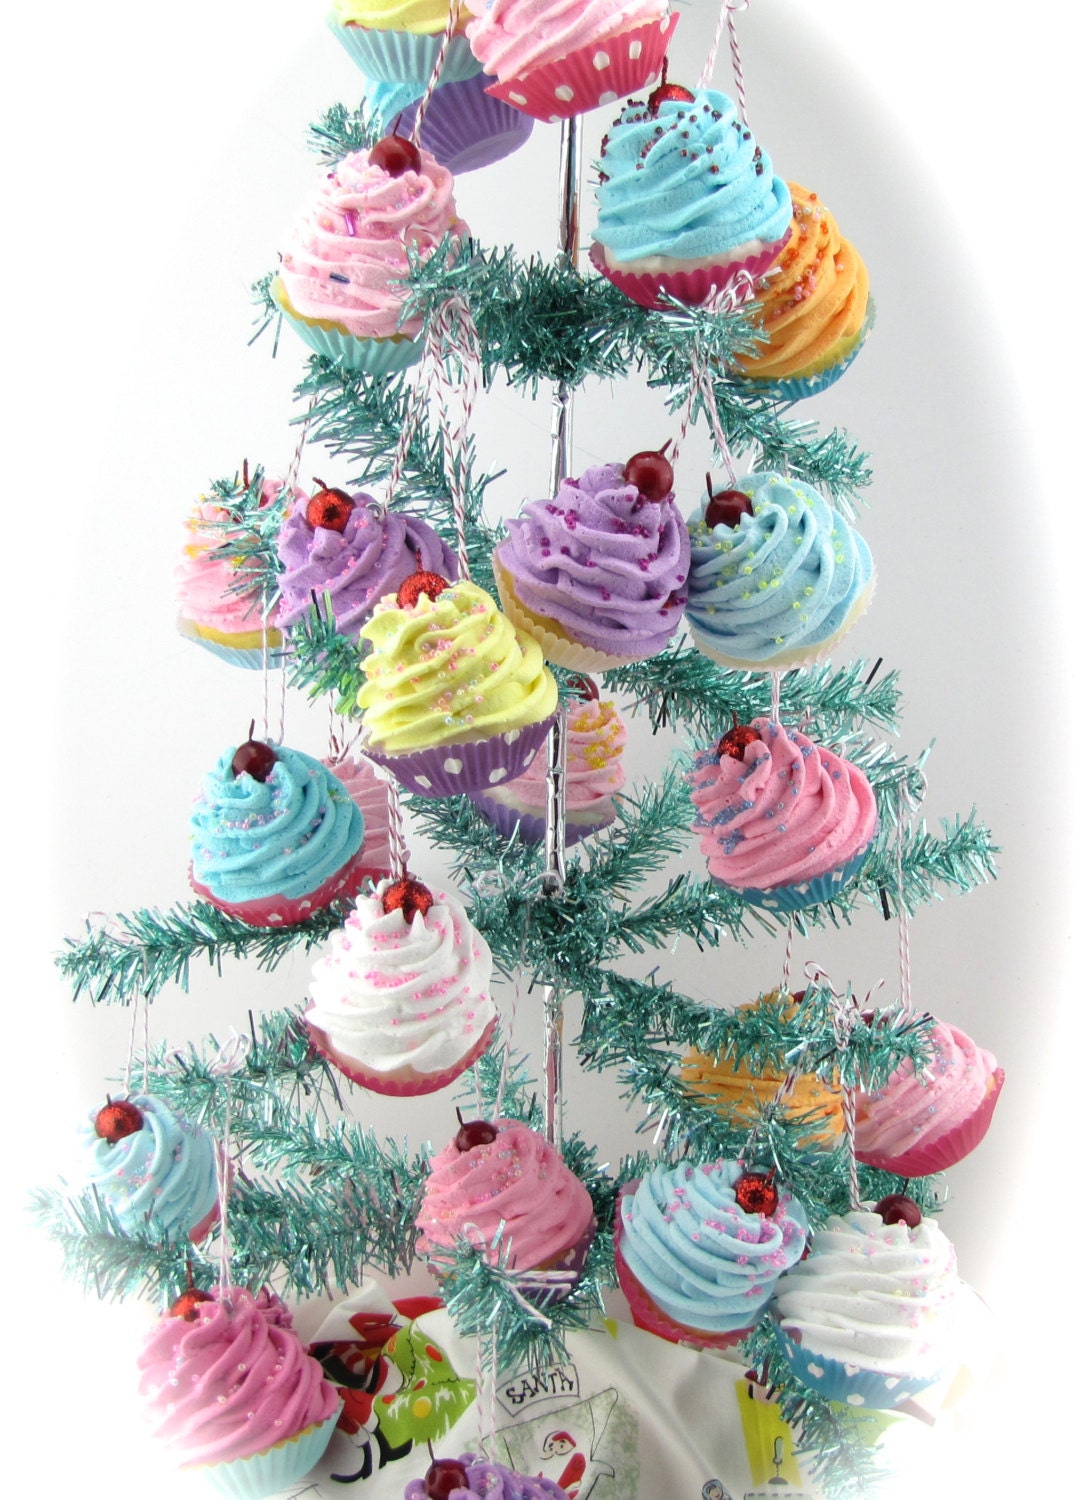 🎄Christmas Tree Mini Cake/Cupcake/Muffin Pan